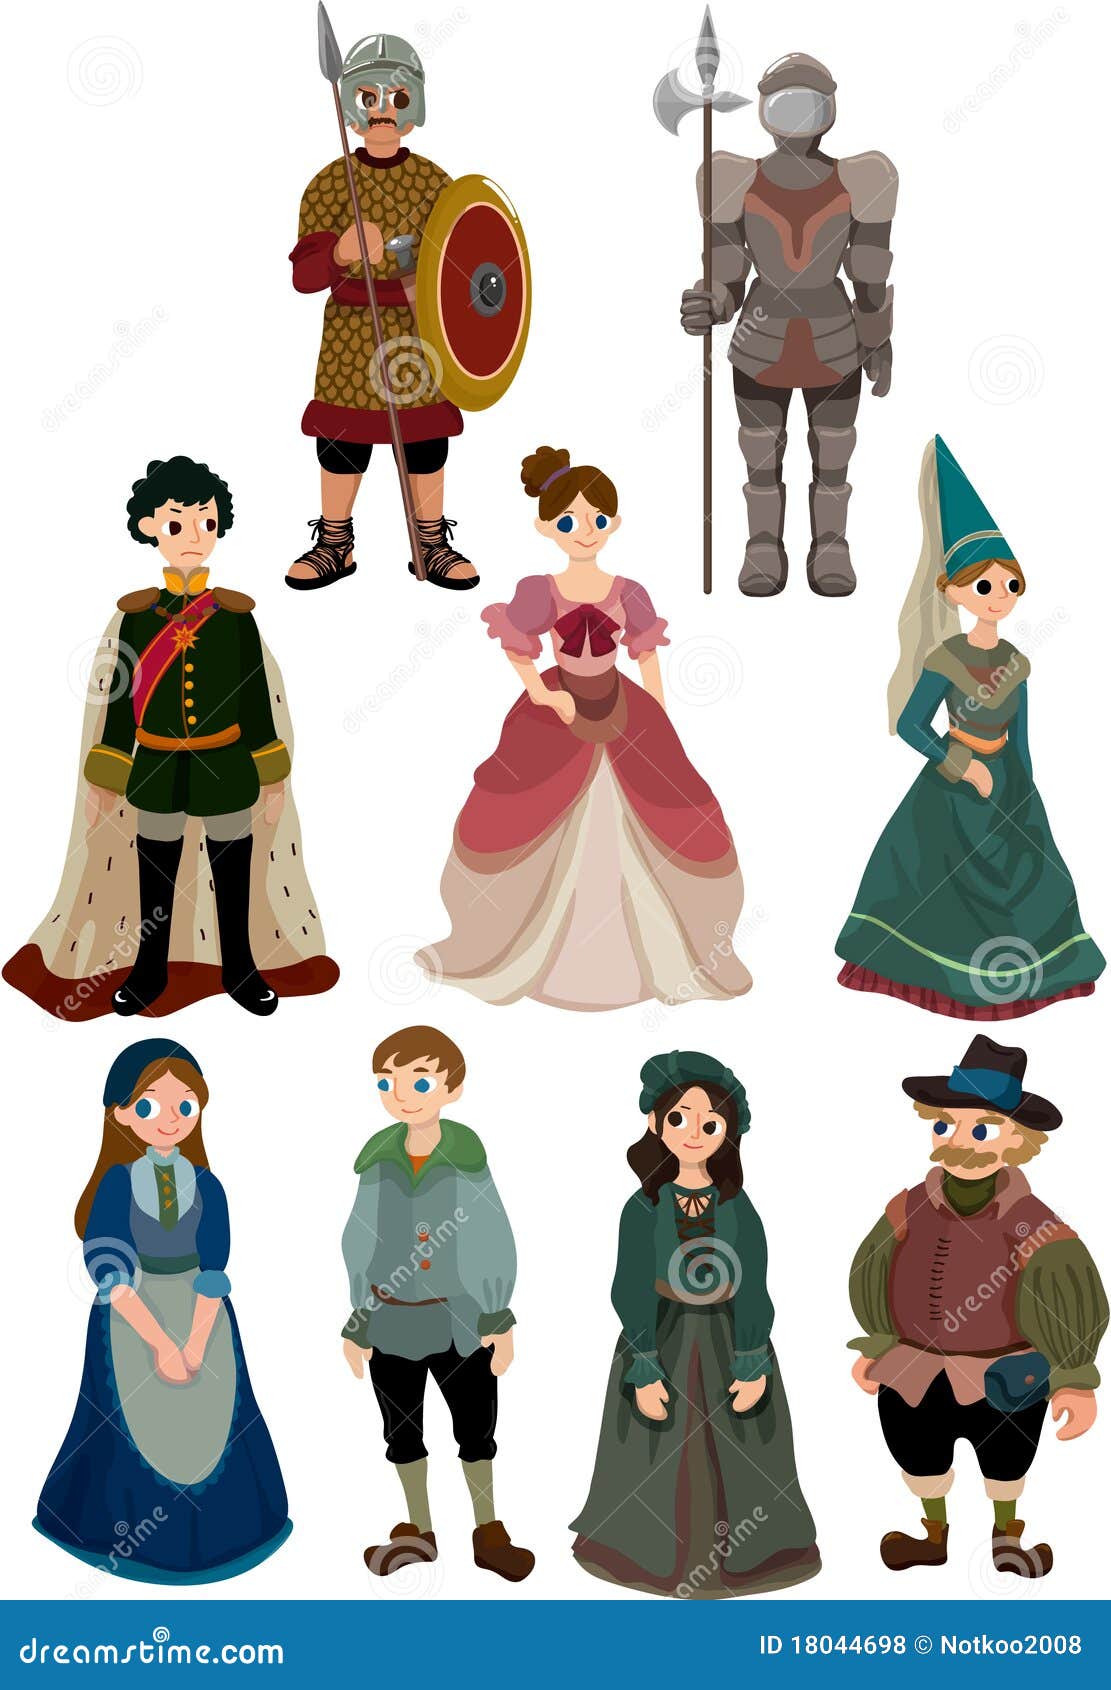 cartoon medieval people icon